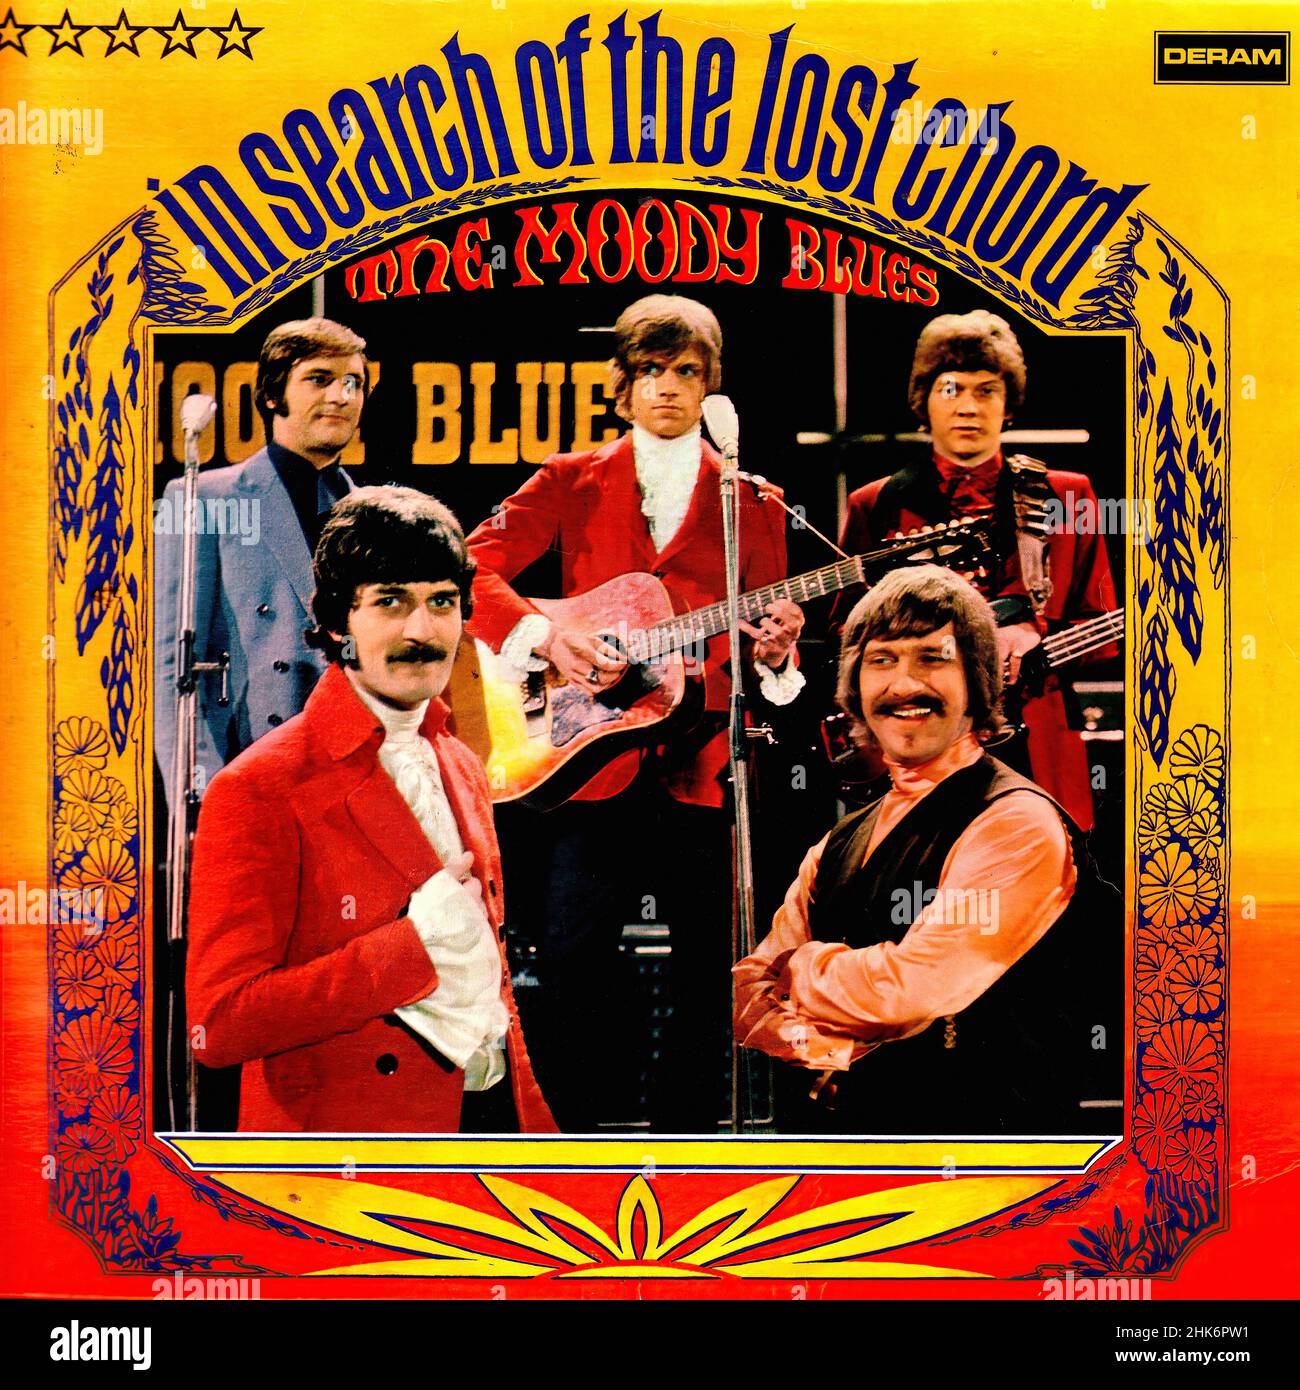 Copertina Vintage vinyl record - Moody Blues, The - alla ricerca del cordone perduto - D - 1968 02 Foto Stock